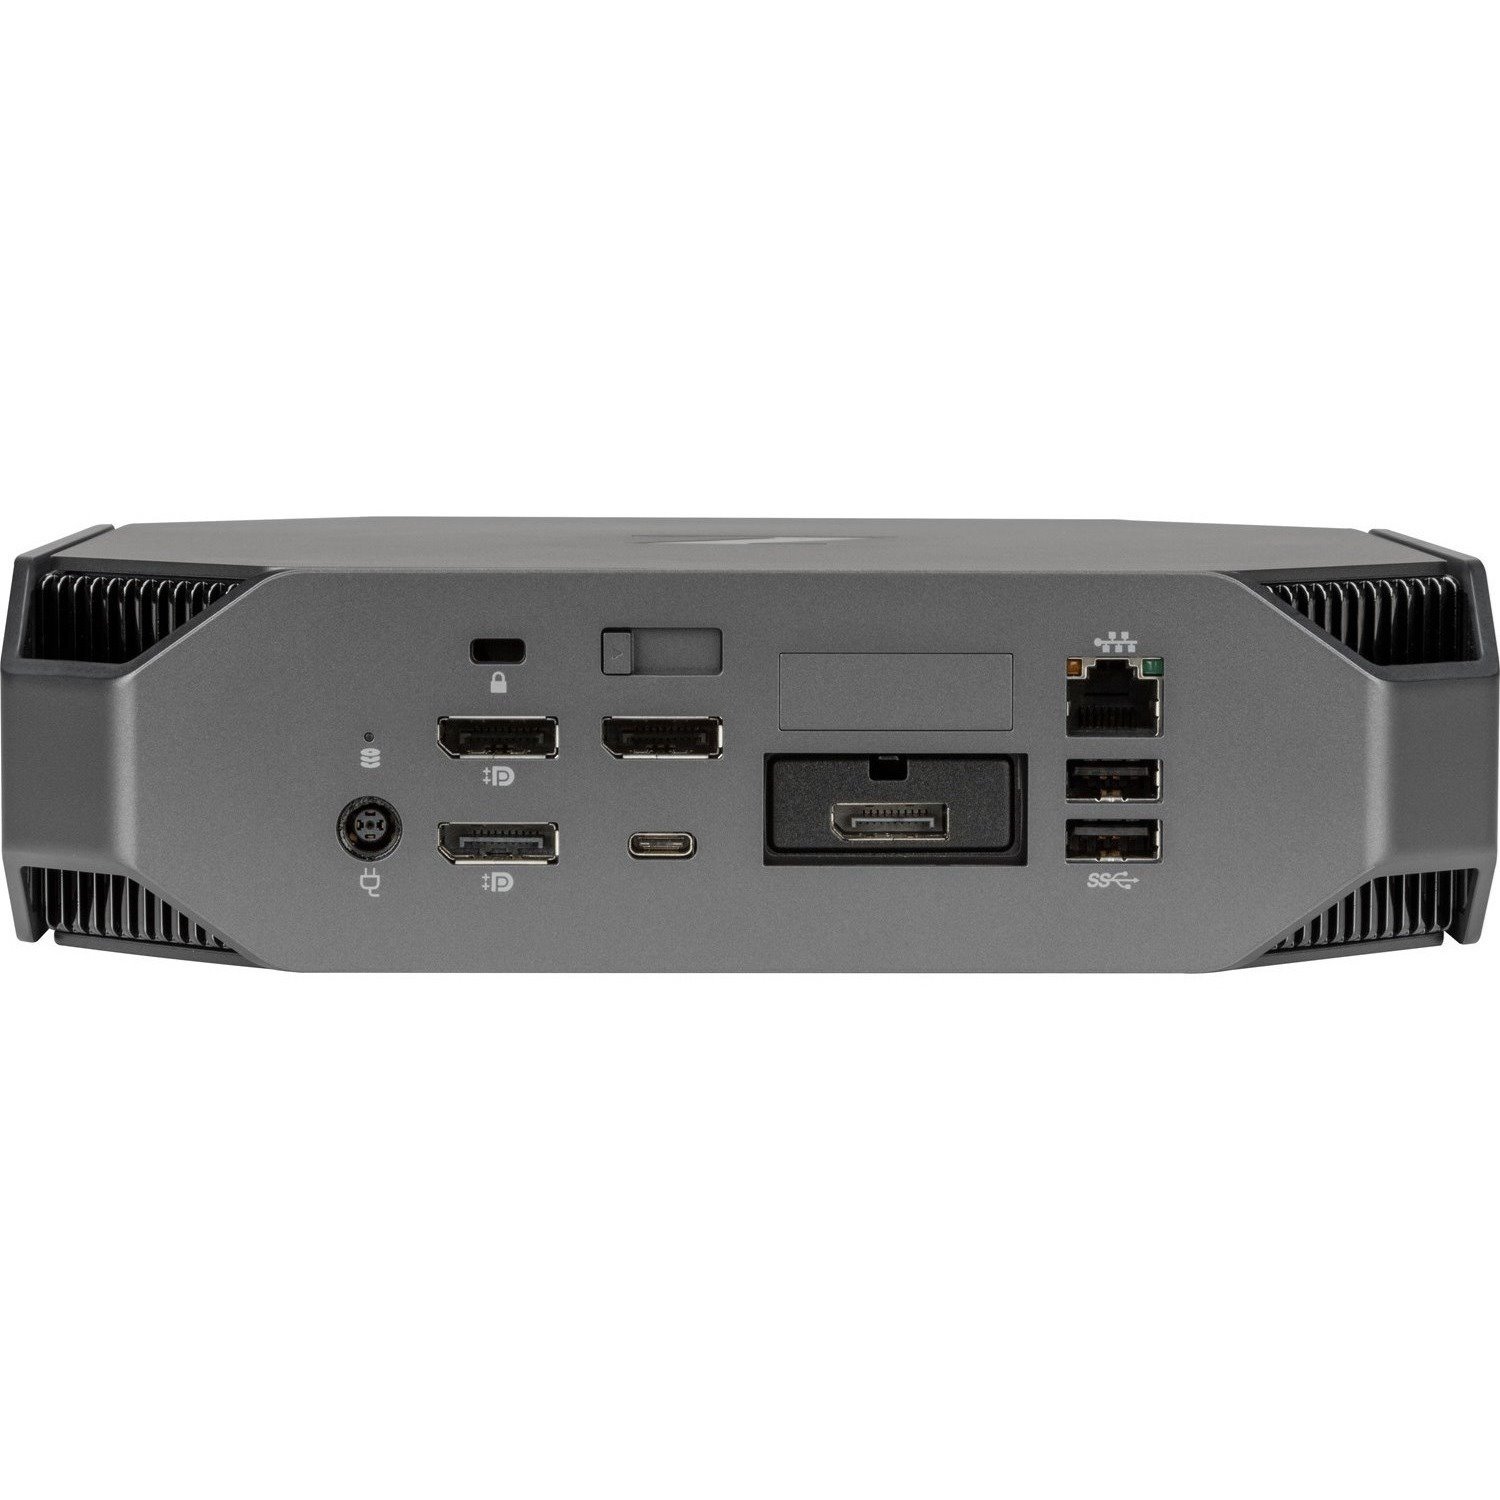 HP Z2 Mini G4 Workstation - 1 x Intel Core i7 9th Gen i7-9700 - 16 GB - 512 GB SSD - Mini PC - Space Gray, Black Chrome Accent